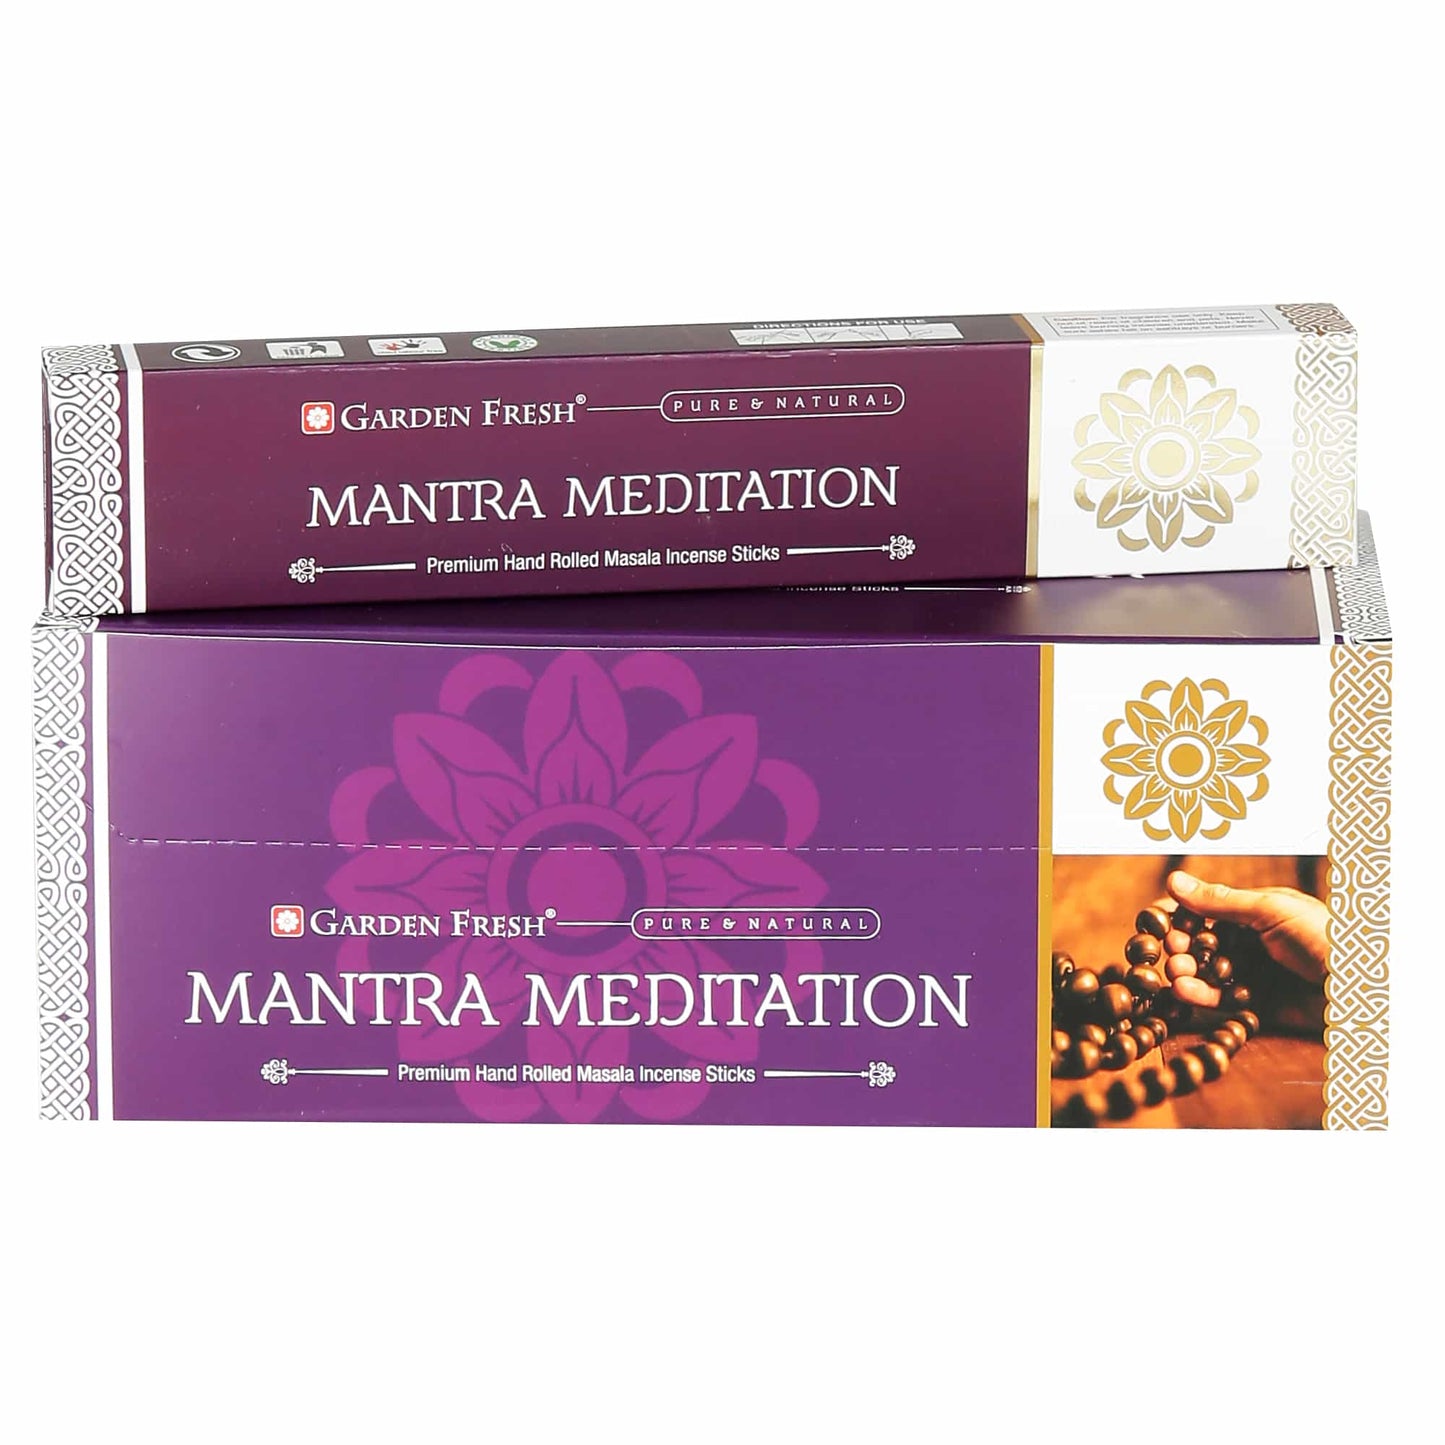 Mantra Meditation masala incense sticks